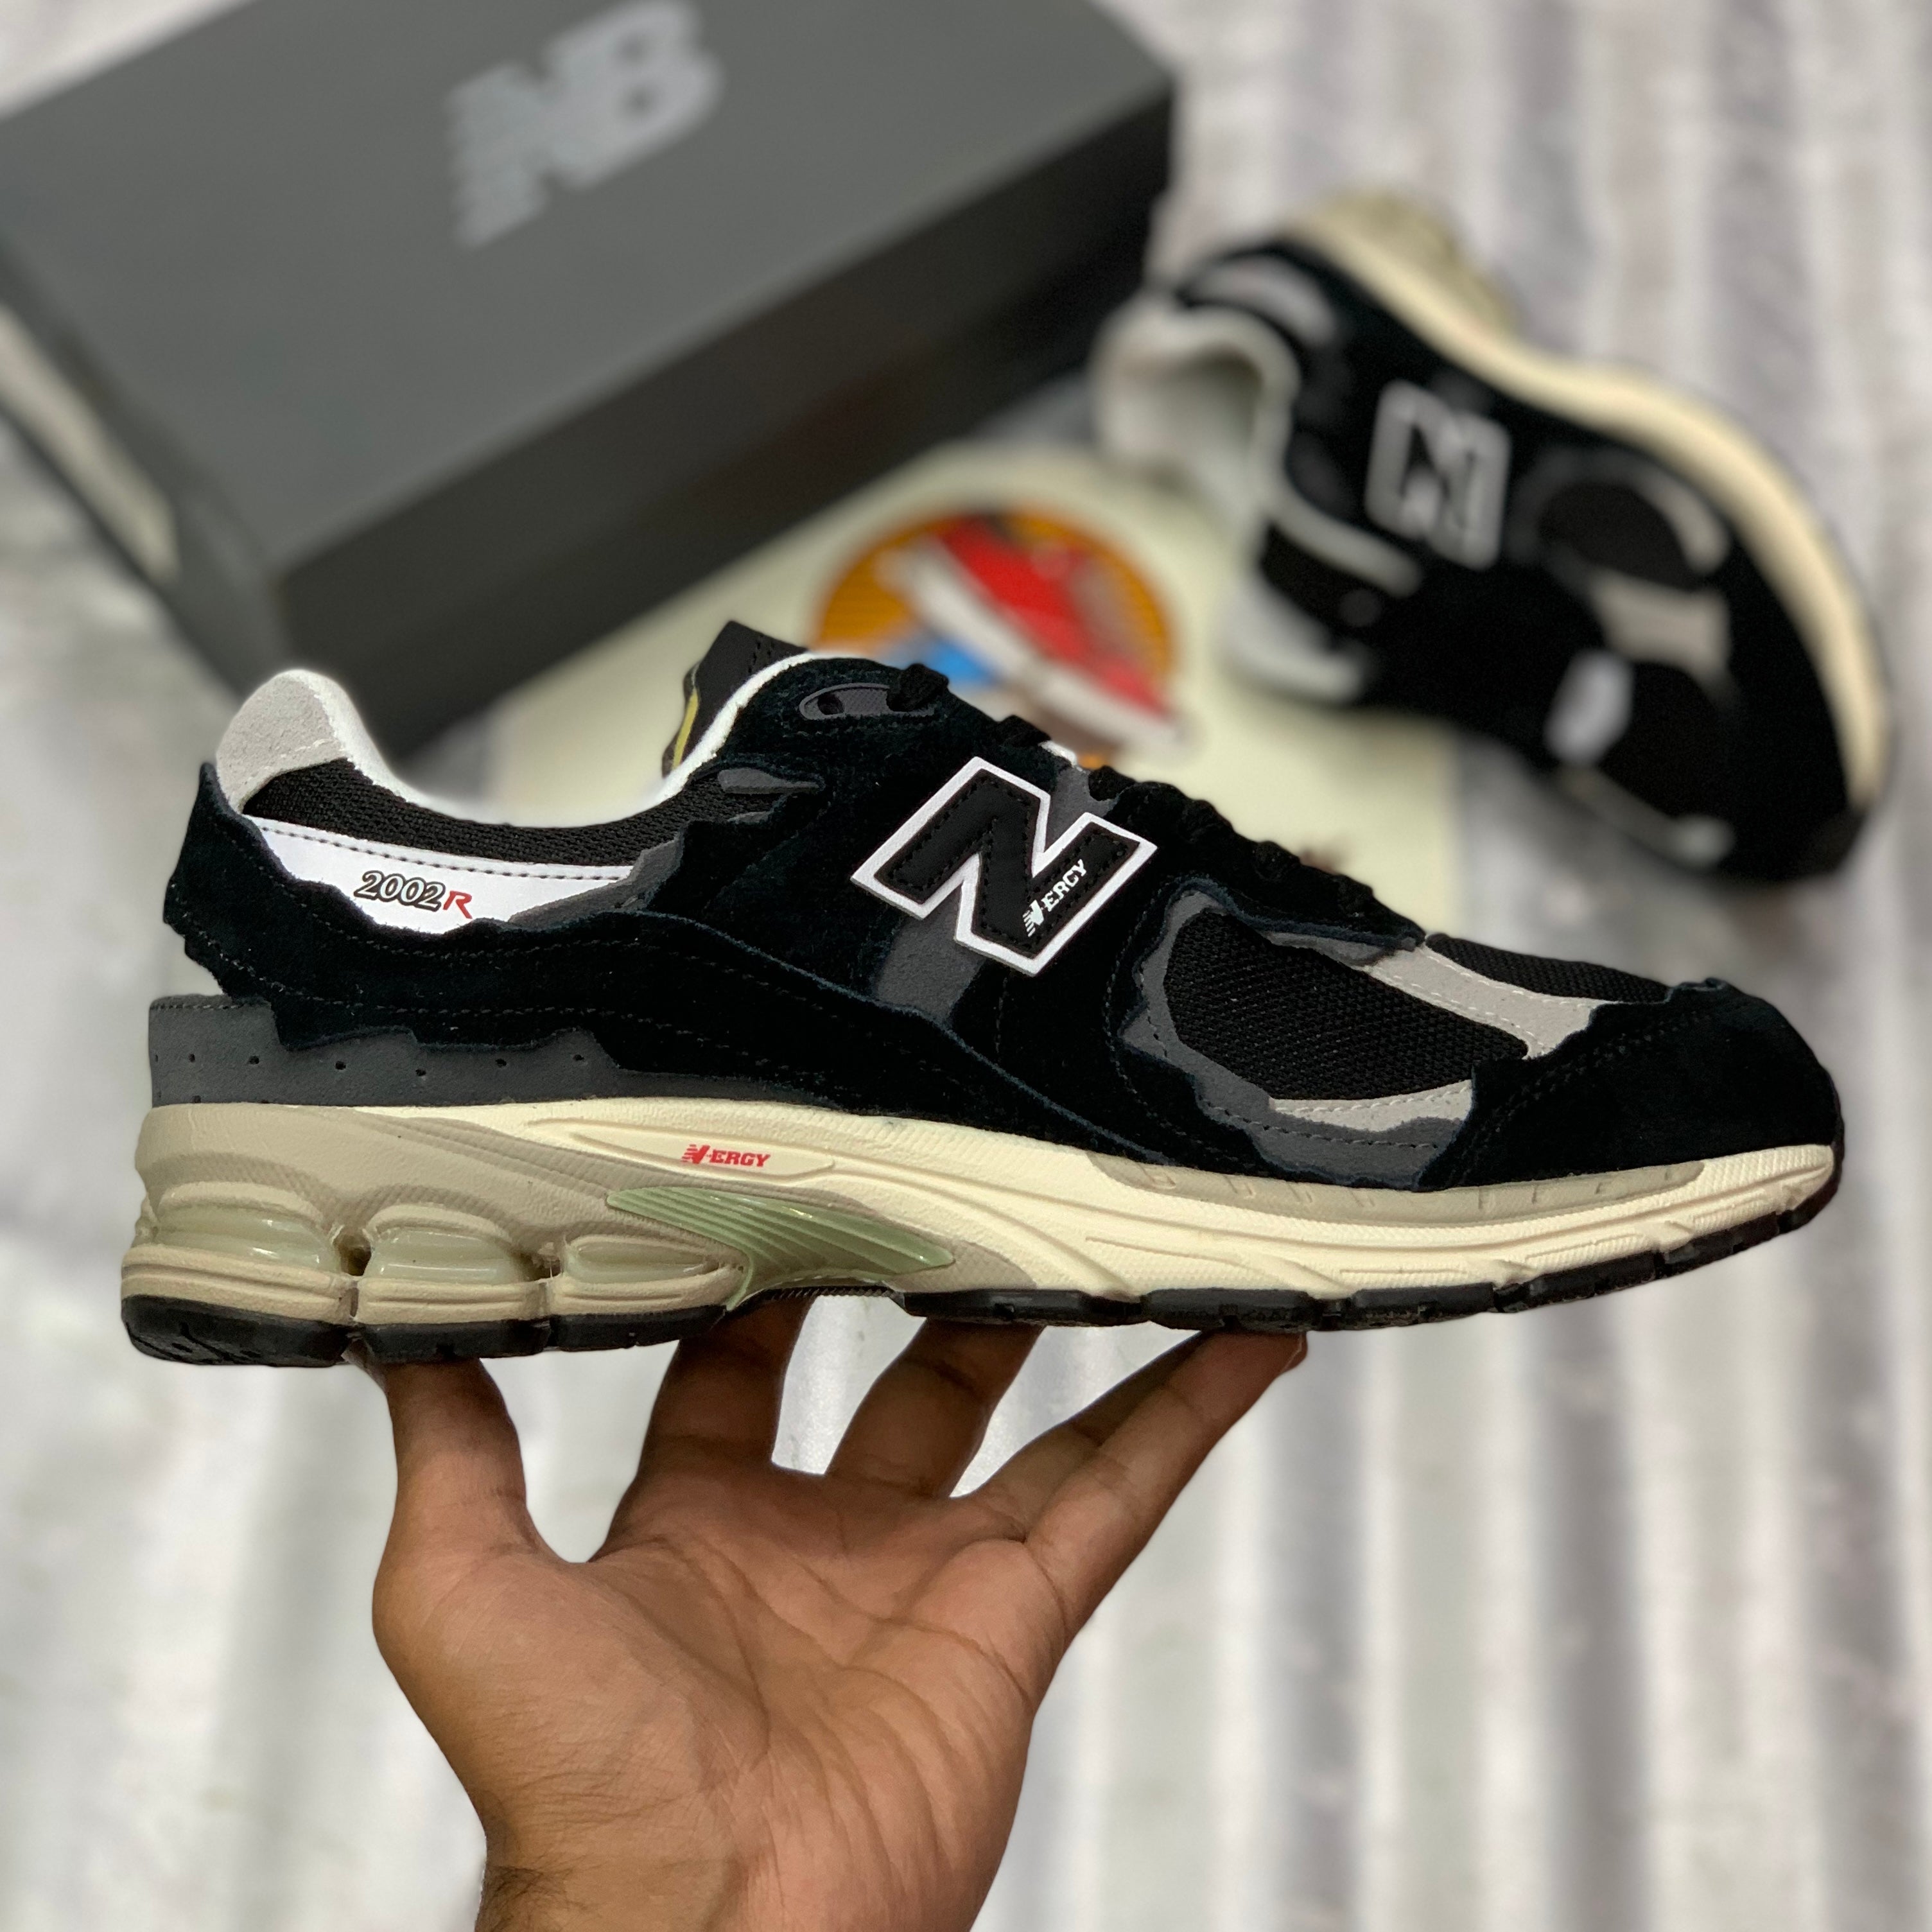 NB 2002rr Prottection Packk “Black Grey” Premium Batch – Sneaker Hub